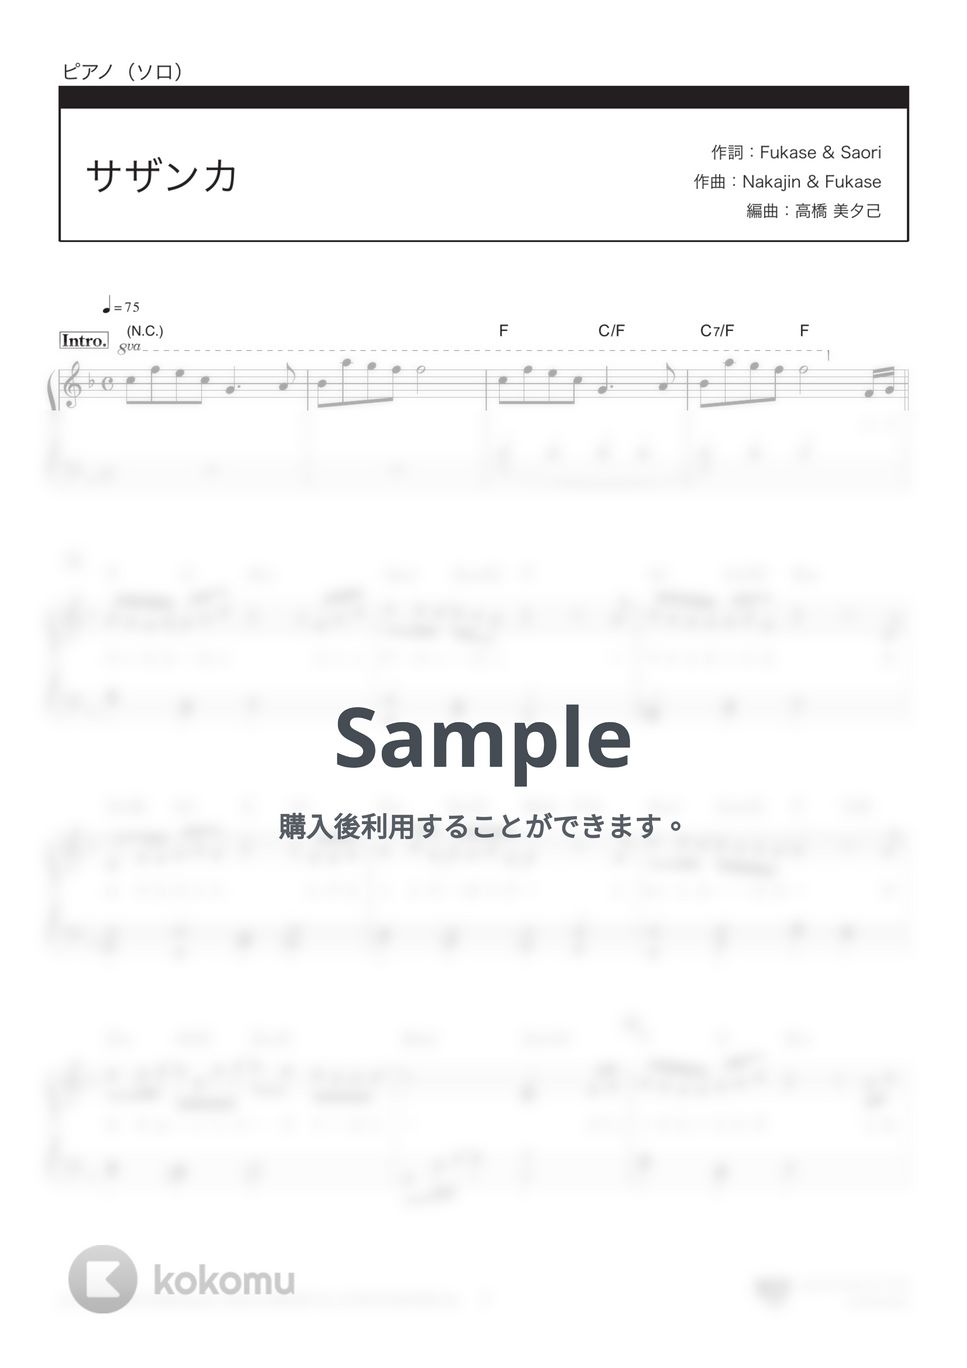 SEKAI NO OWARI - サザンカ (NHKピョンチャン2018放送テーマソング) by 楽譜仕事人_高橋美夕己